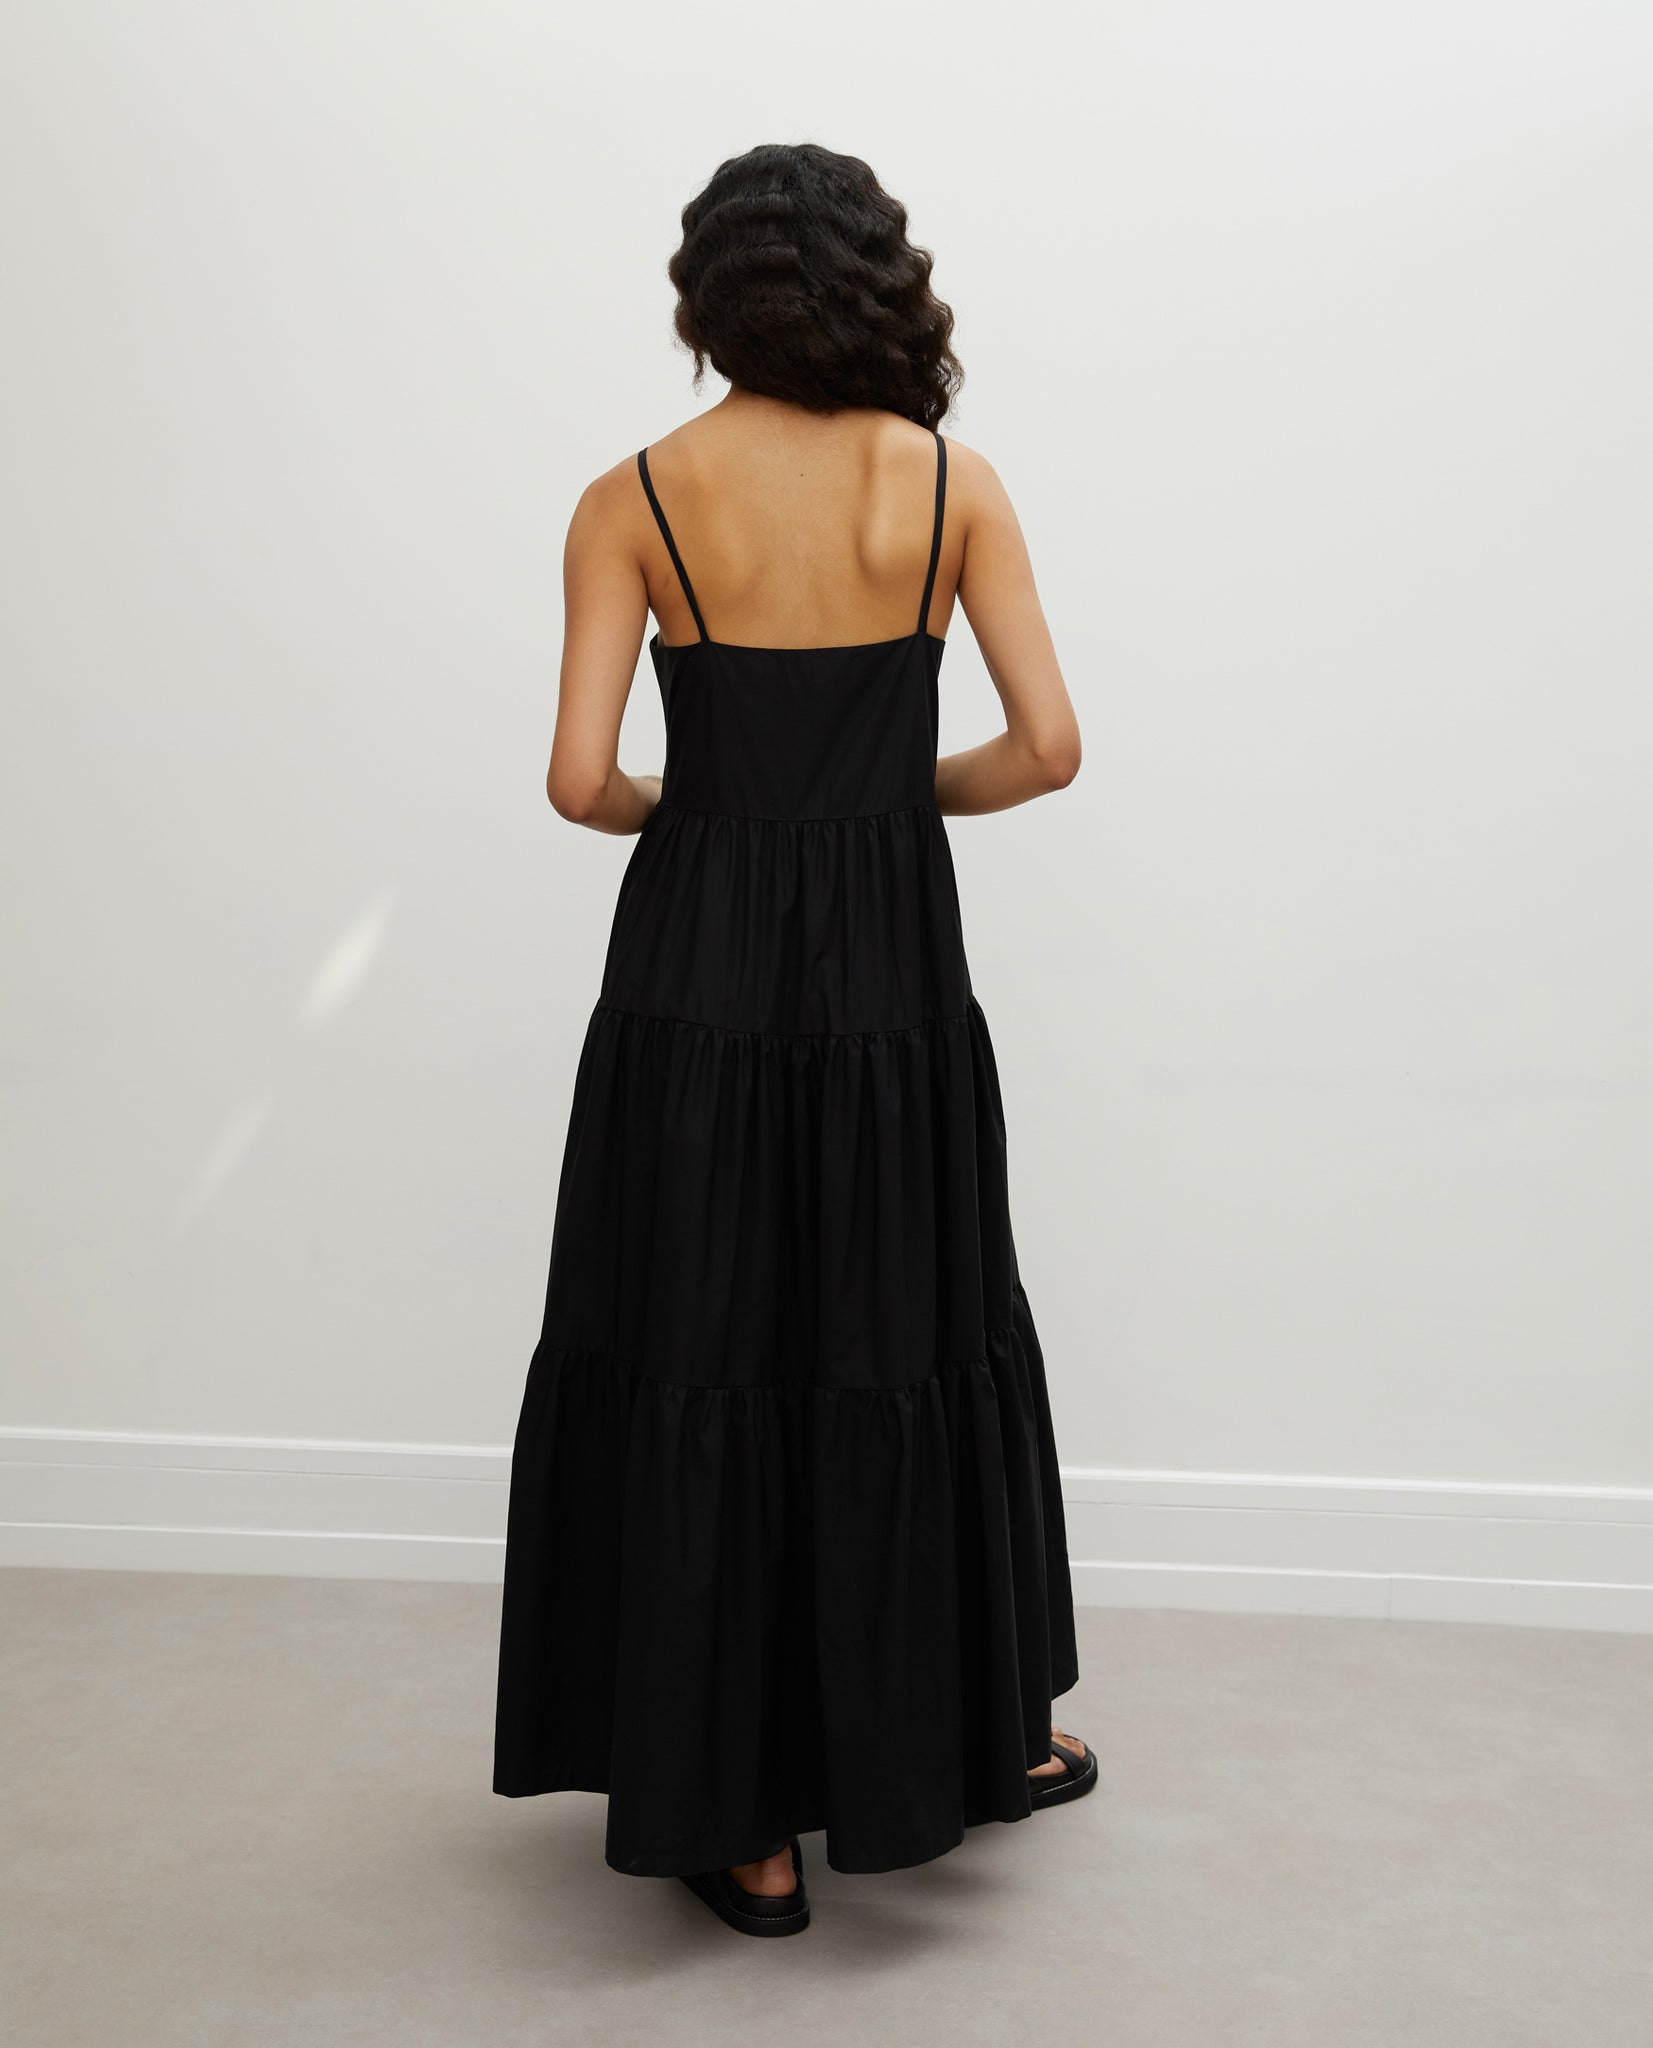 Milou dress in black by Róhe